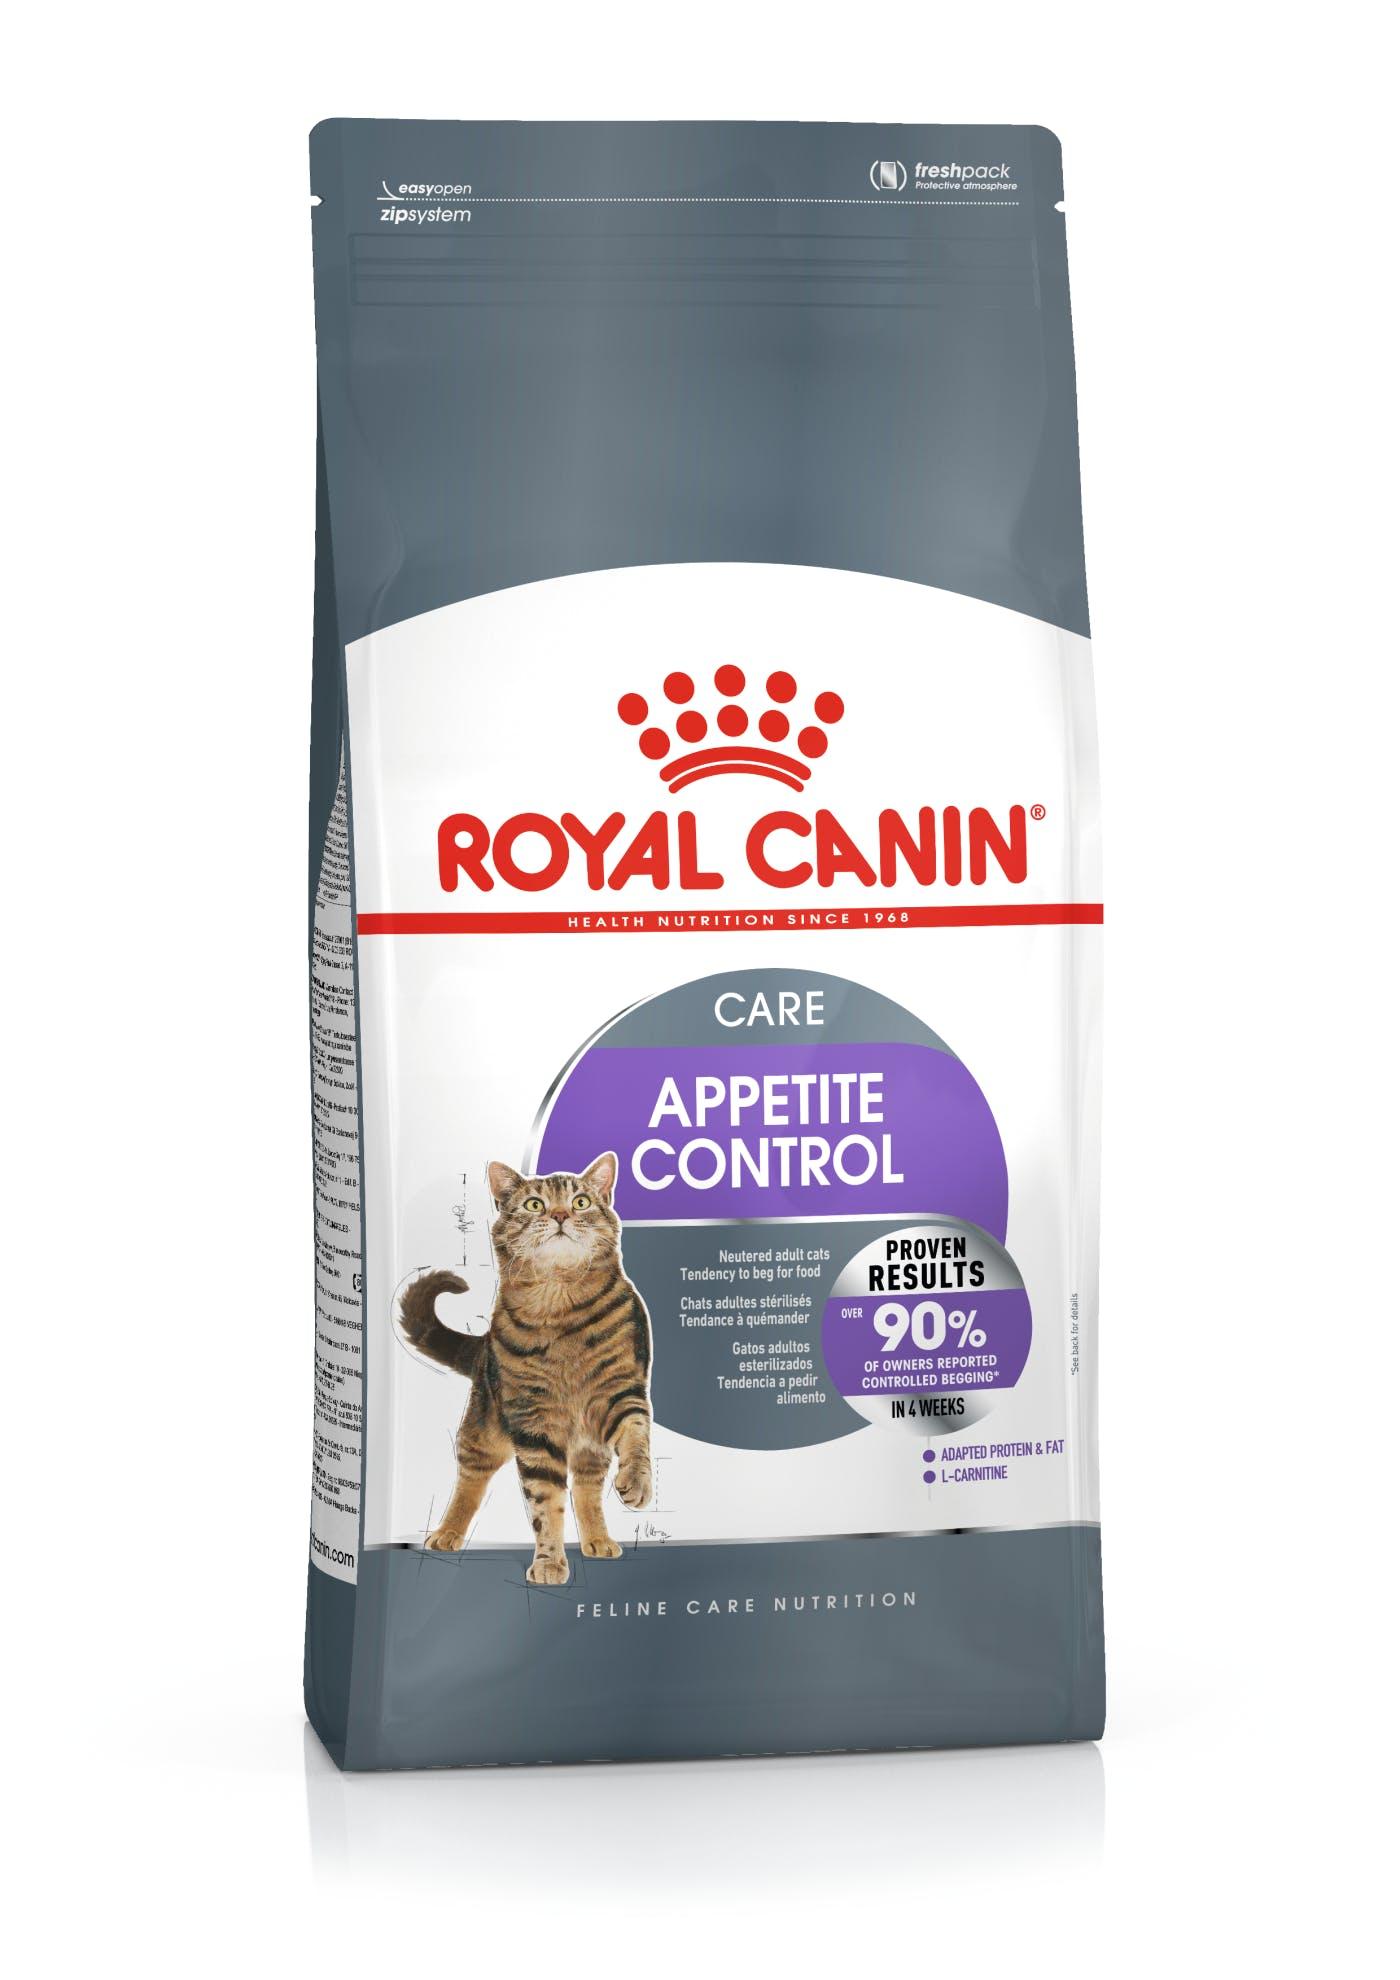 ROYAL CANIN Suva hrana za sterilisane mačke Appetite Control Care 2kg